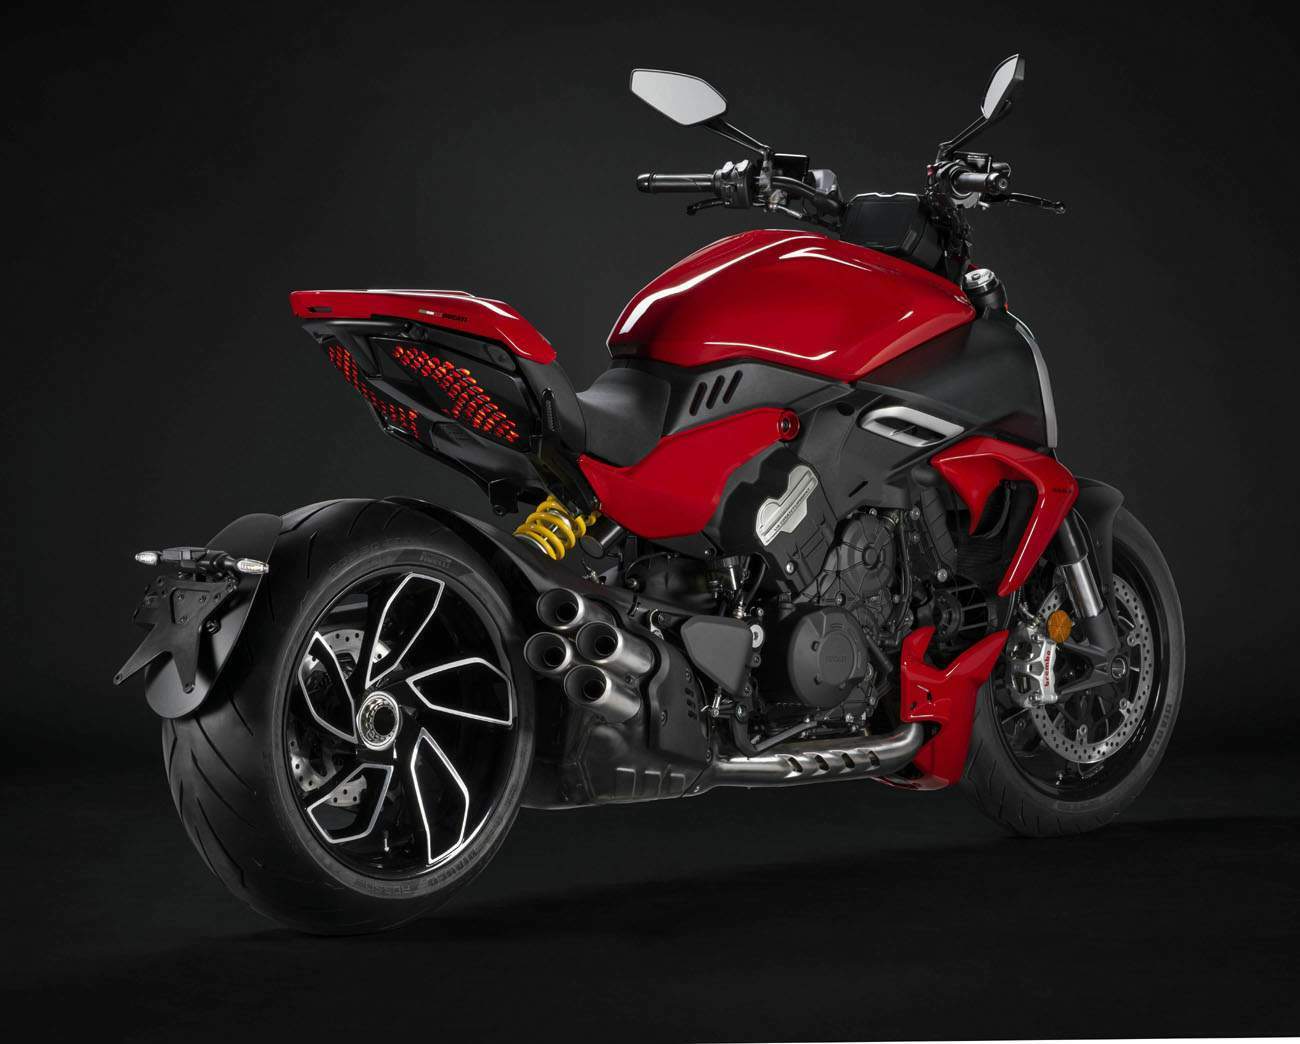 Ducati Diavel V4 technical specifications